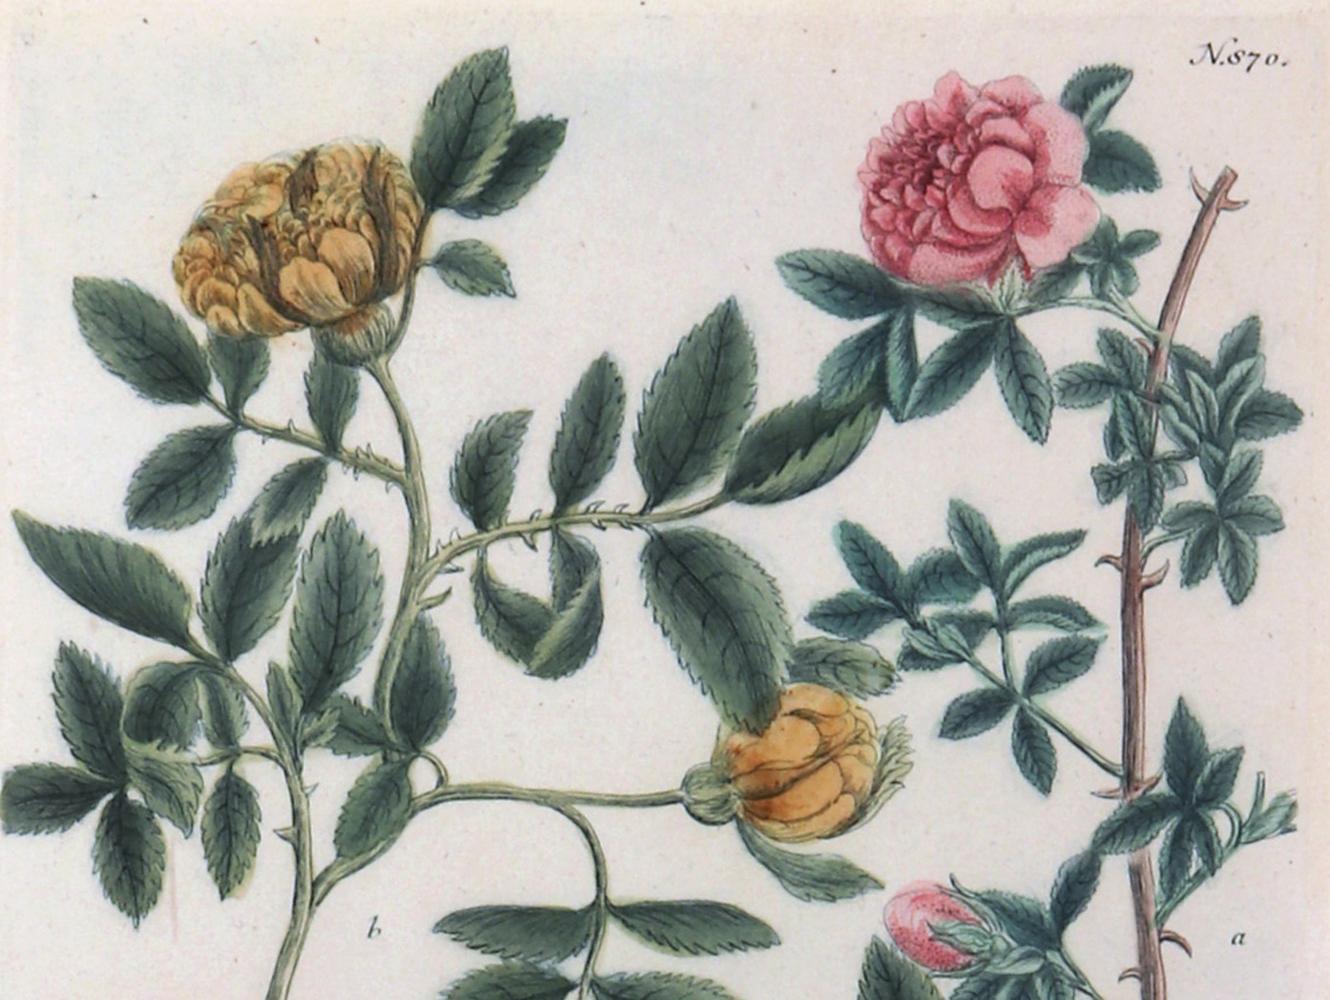 Johann Wilhelm Weinmann print of roses with decoupage frame,
 Engraved by Johann Jacob Haid,
From Phytanthoza Iconographia,
Circa 1737-1745

The Weinmann engraving of roses is framed within a decoupage frame. The plate, #870, is by Johann Jacob